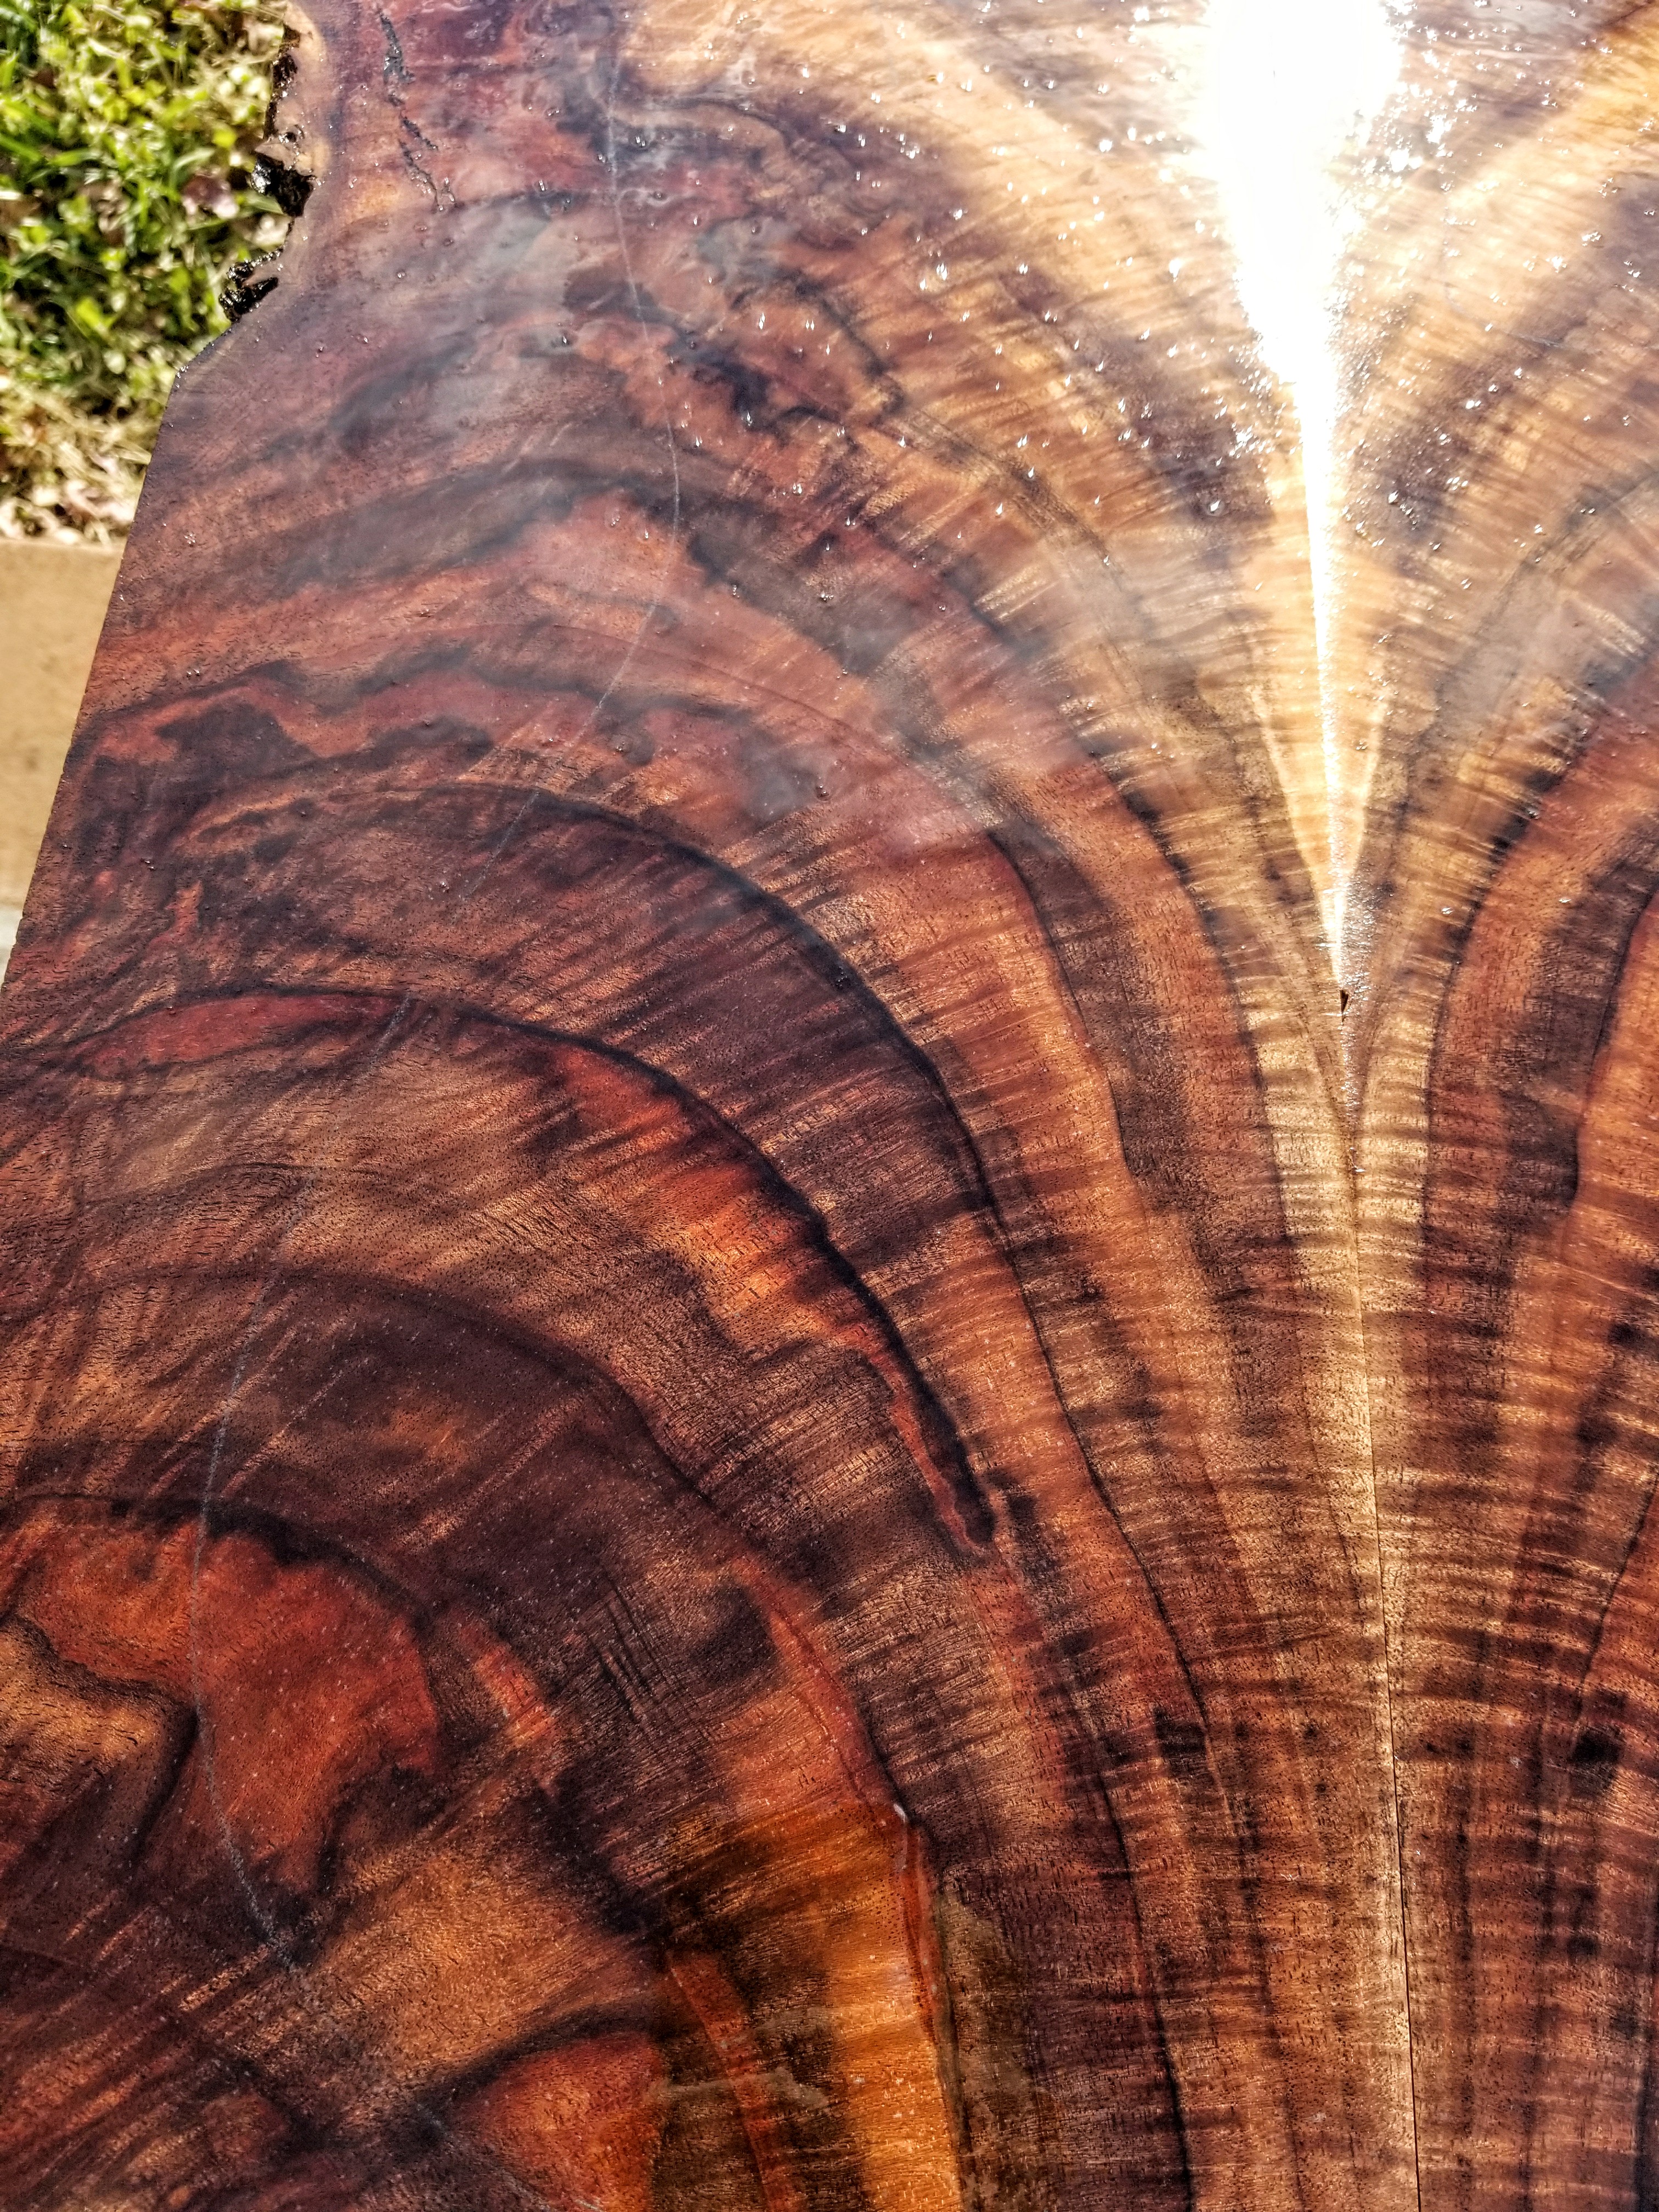 Curly exotics koa wood luthier custom crafts  walnut